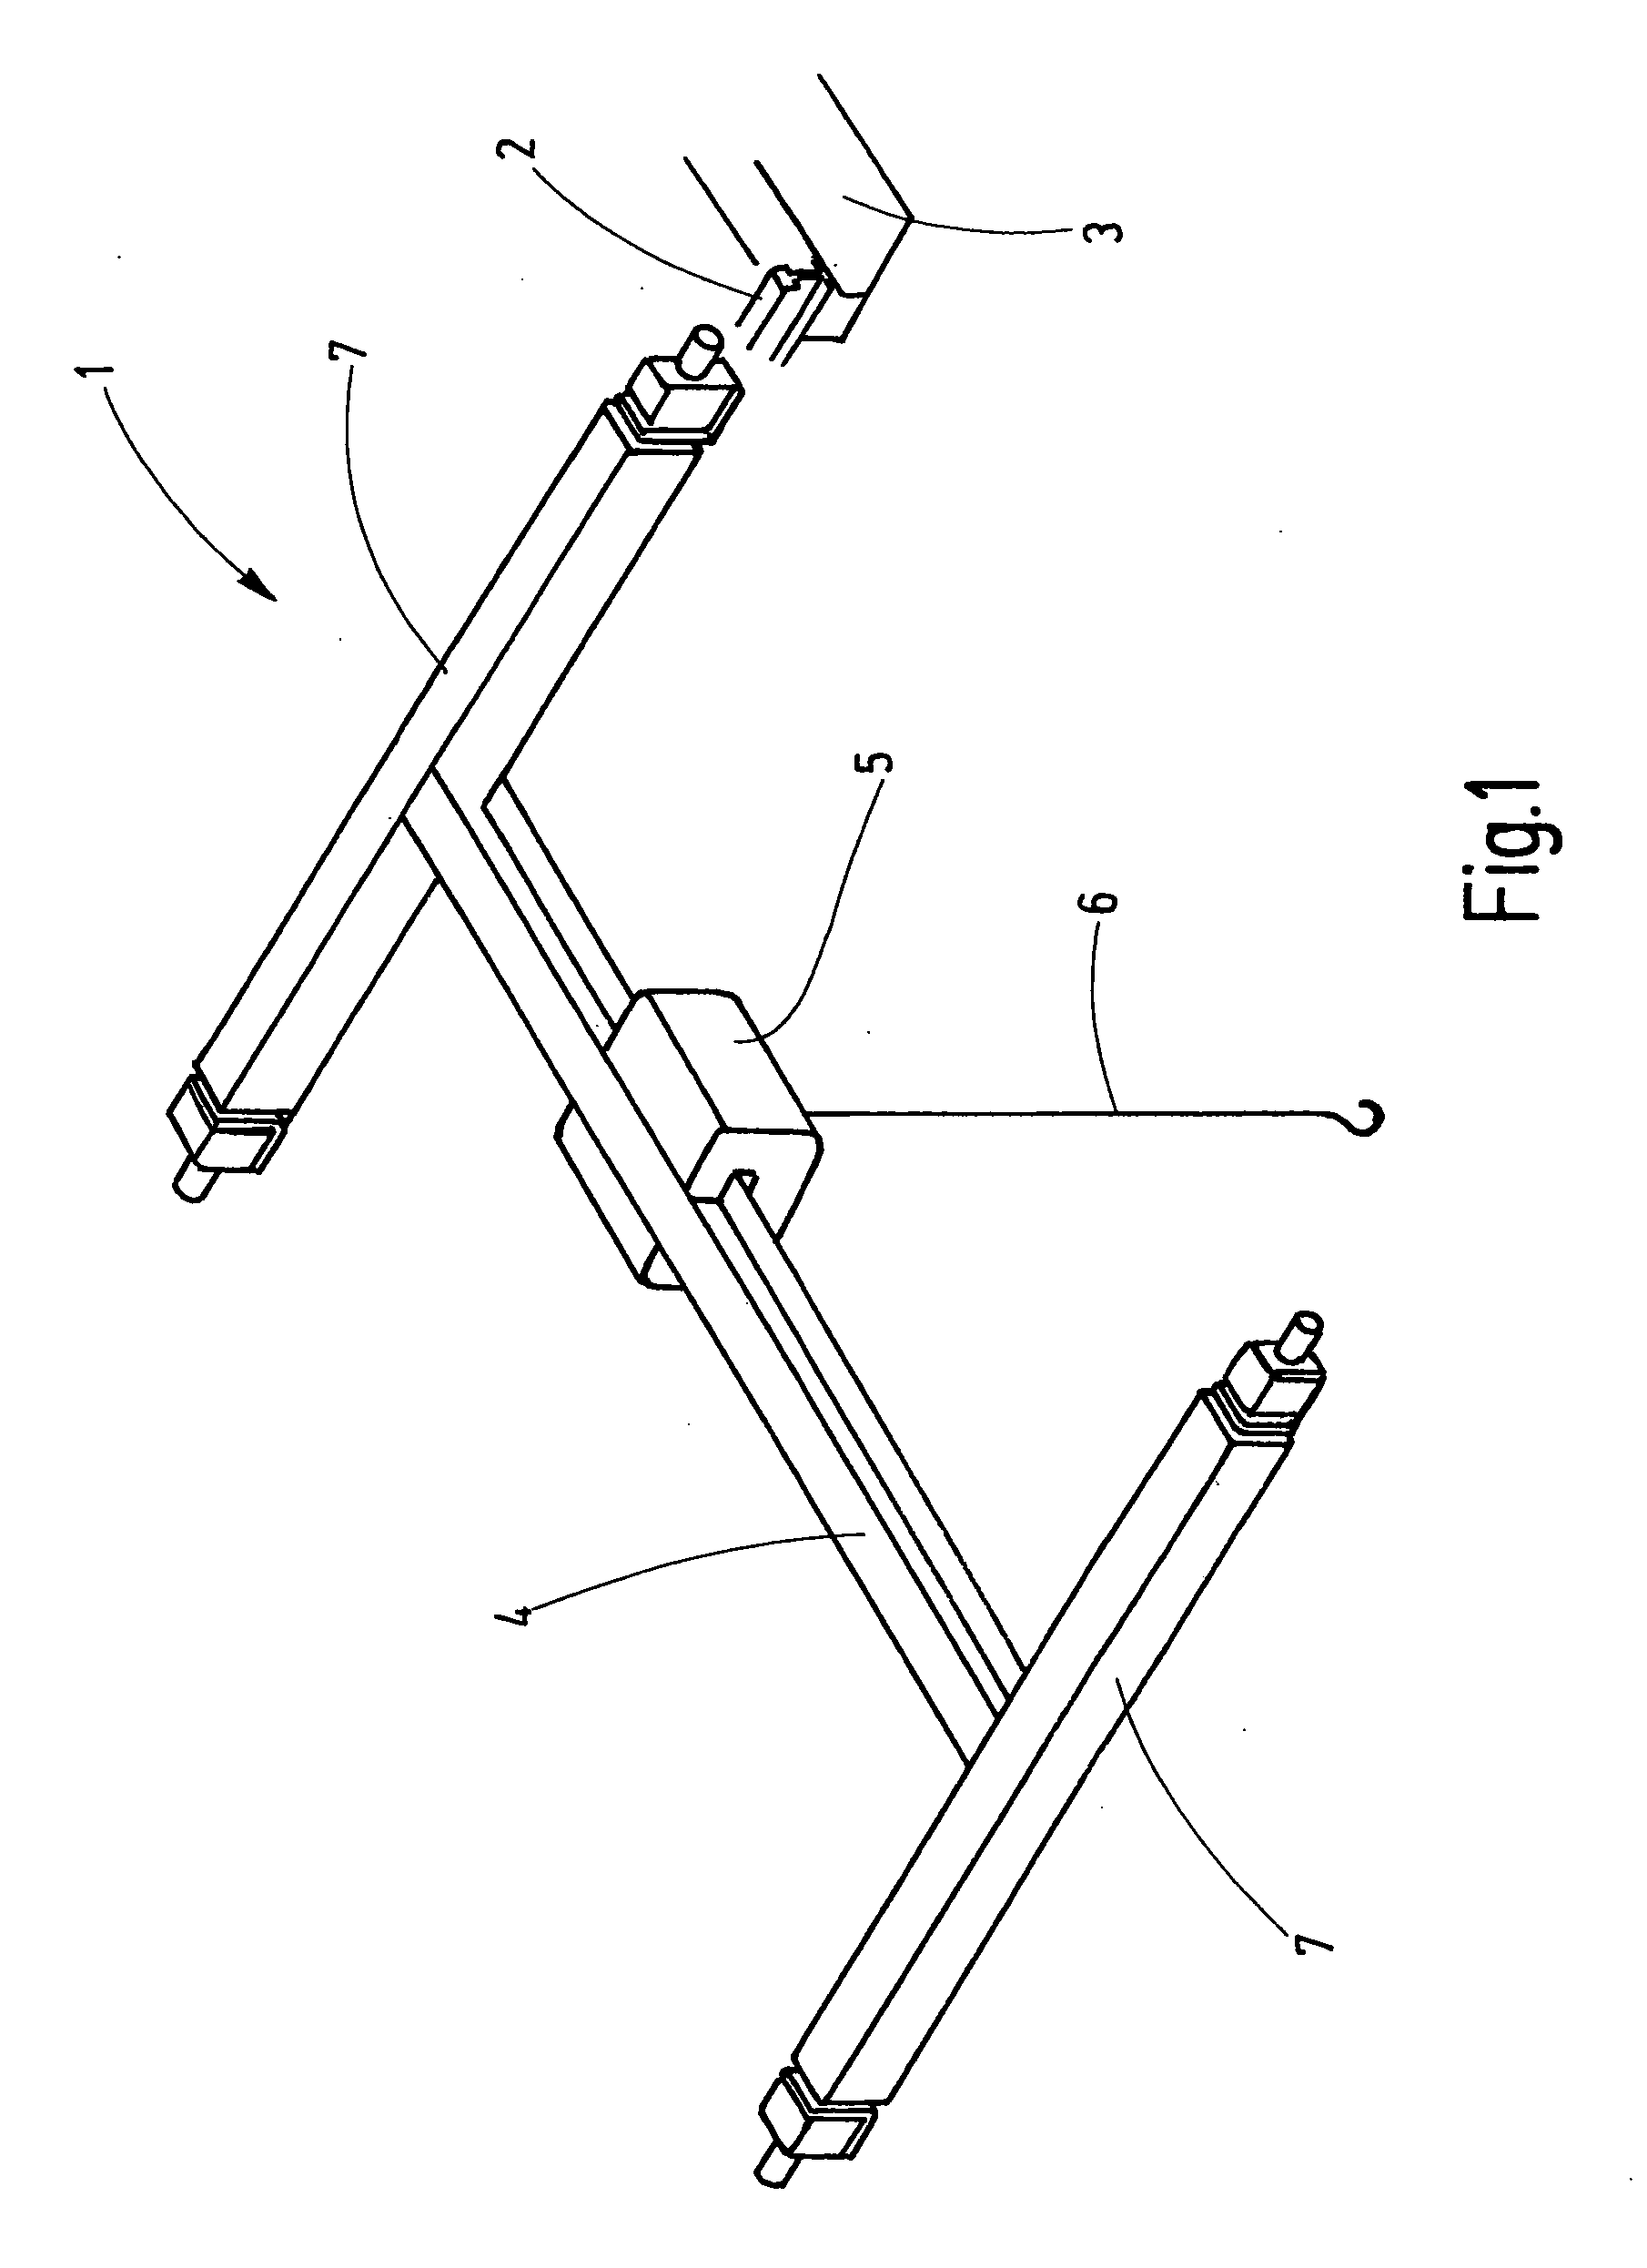 Guide roller arrangement for cranes